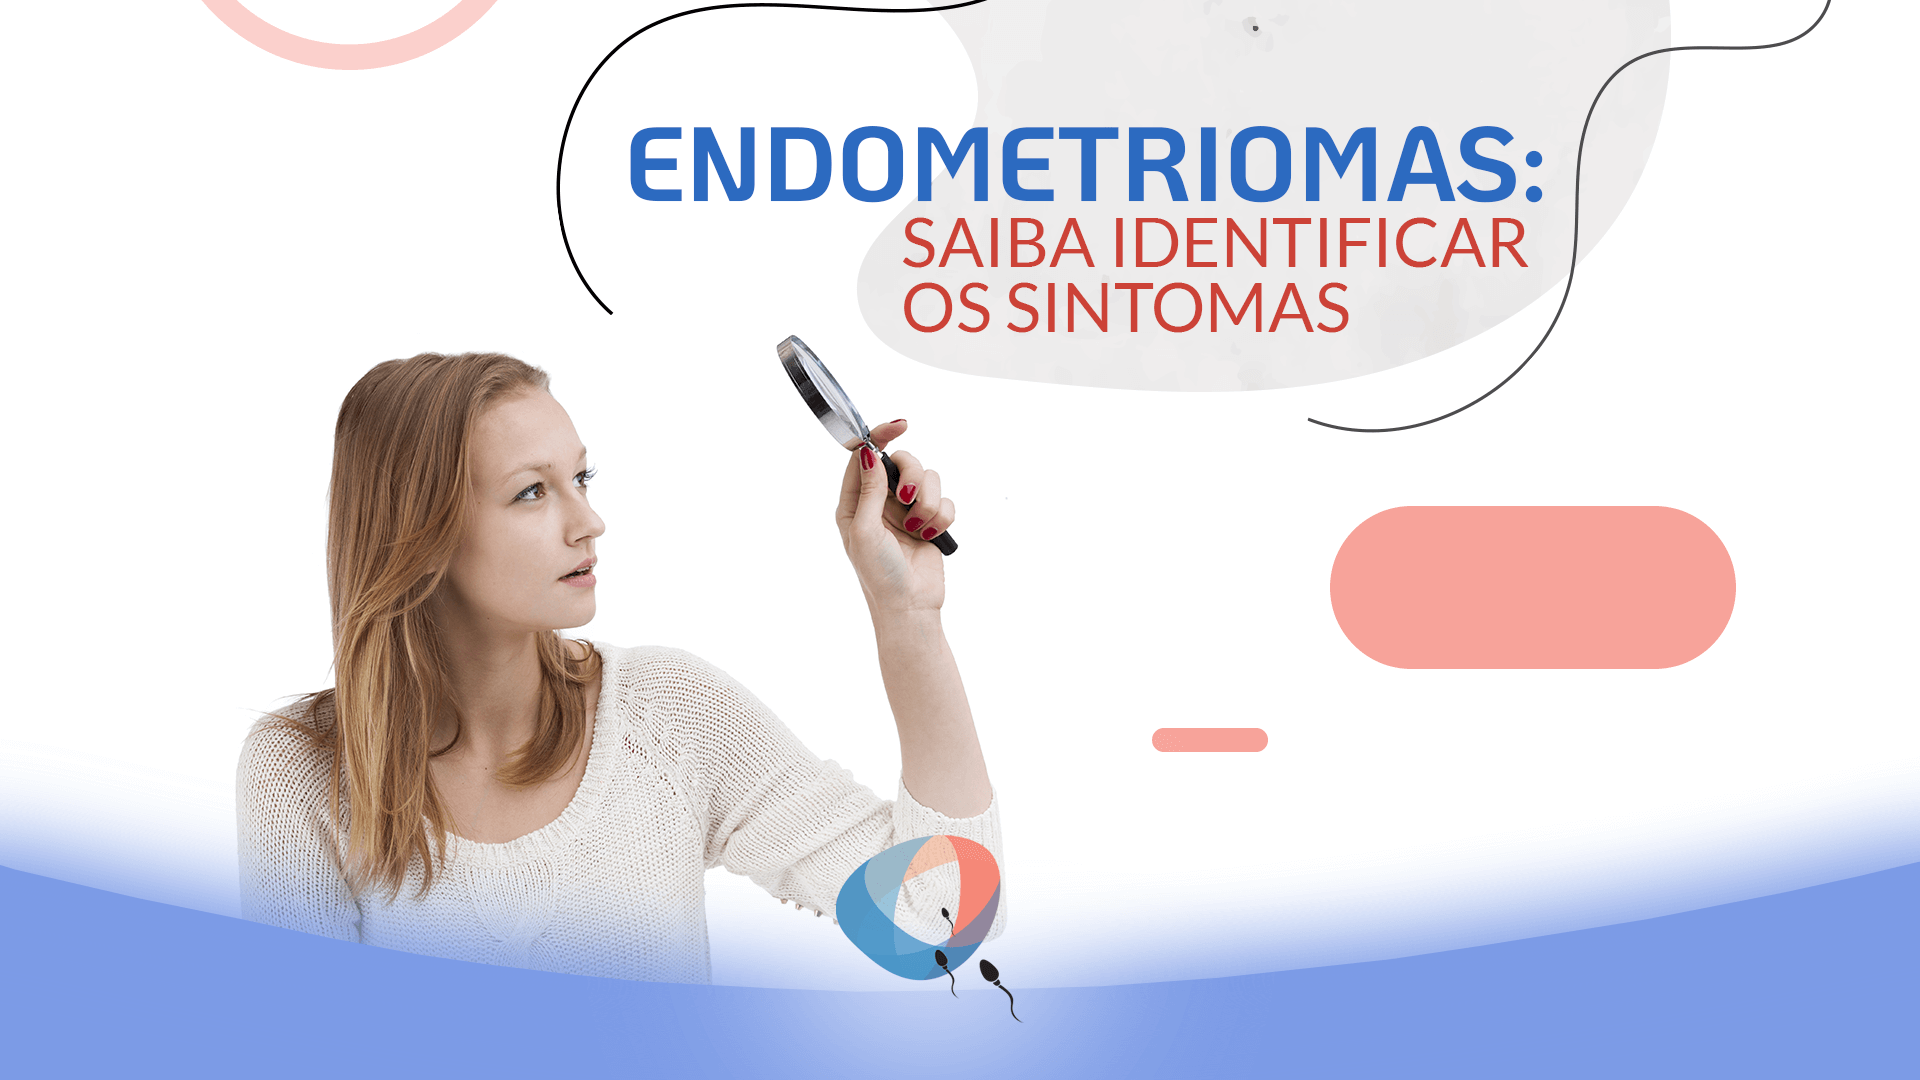 Endometriomas: saiba identificar os sintomas